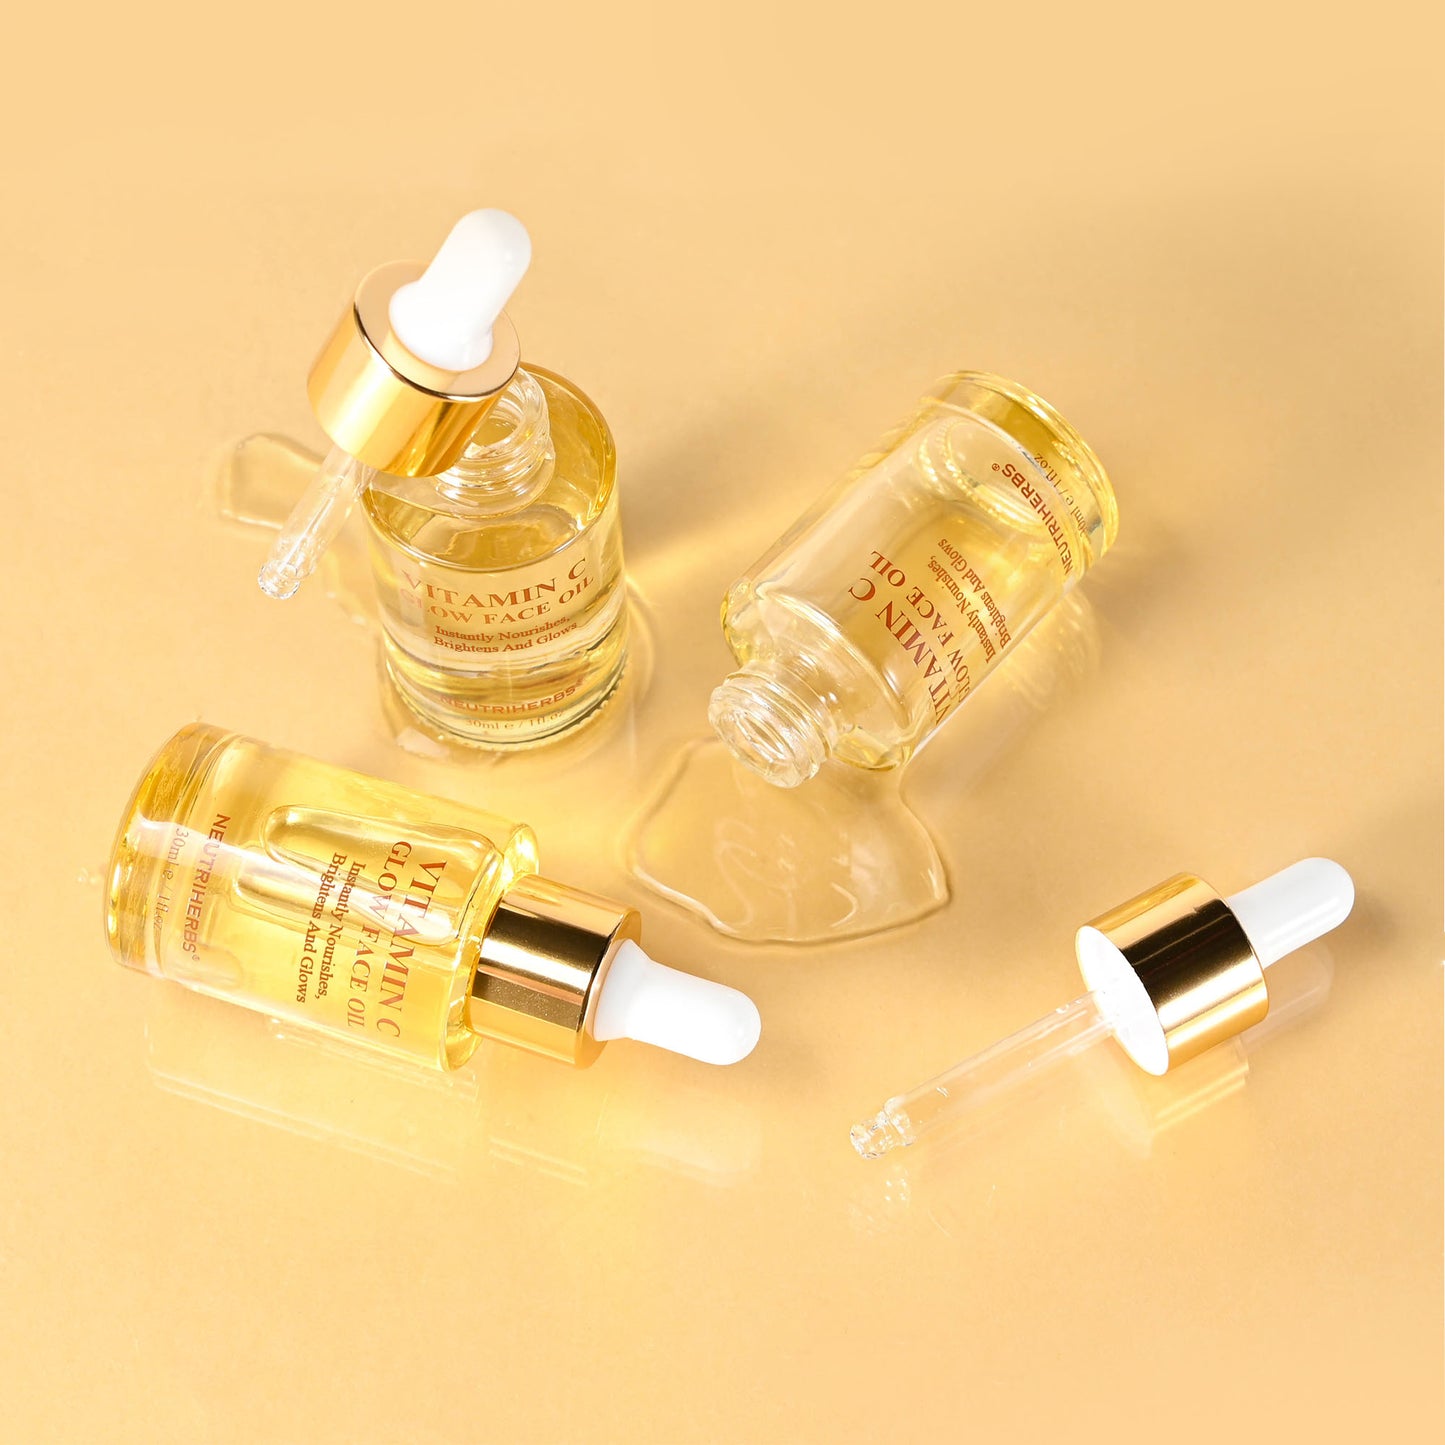 Neutriherbs Facial Oil with Vitamin C, Rosehip & Jojoba for Glowing Skin - 30ml - Neutriherbs SA